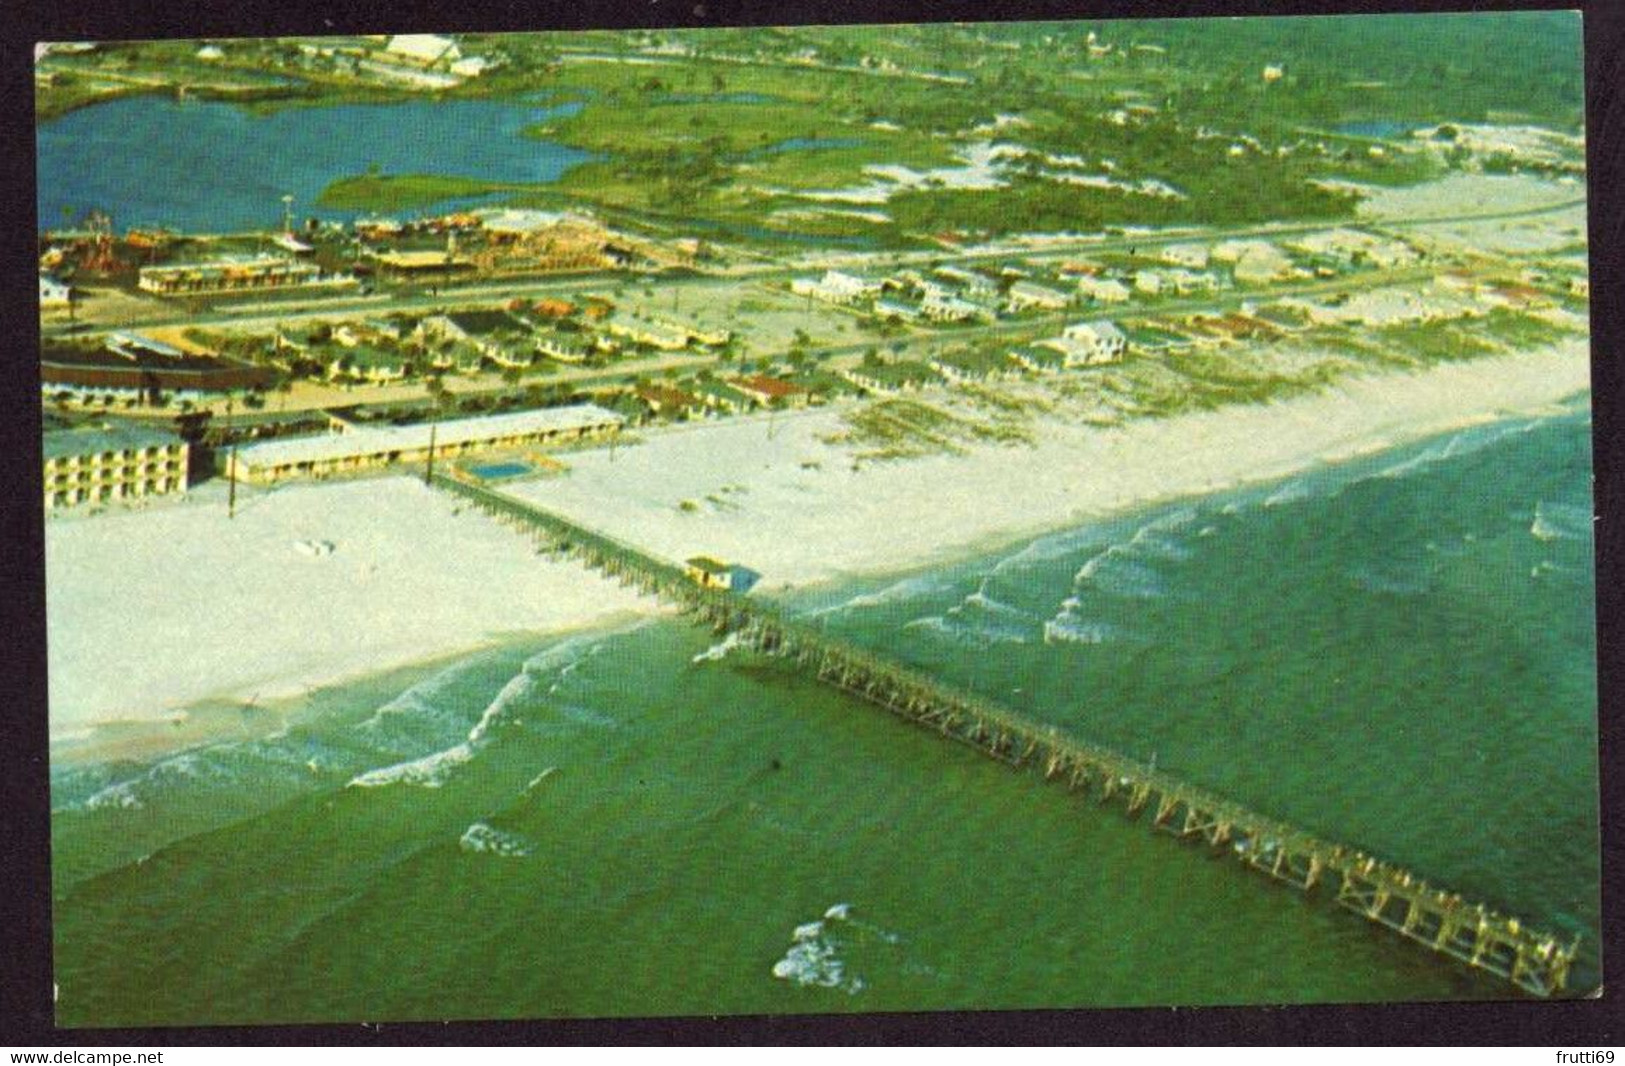 AK 016454 USA - Florida - Panama City Beach - Panama City